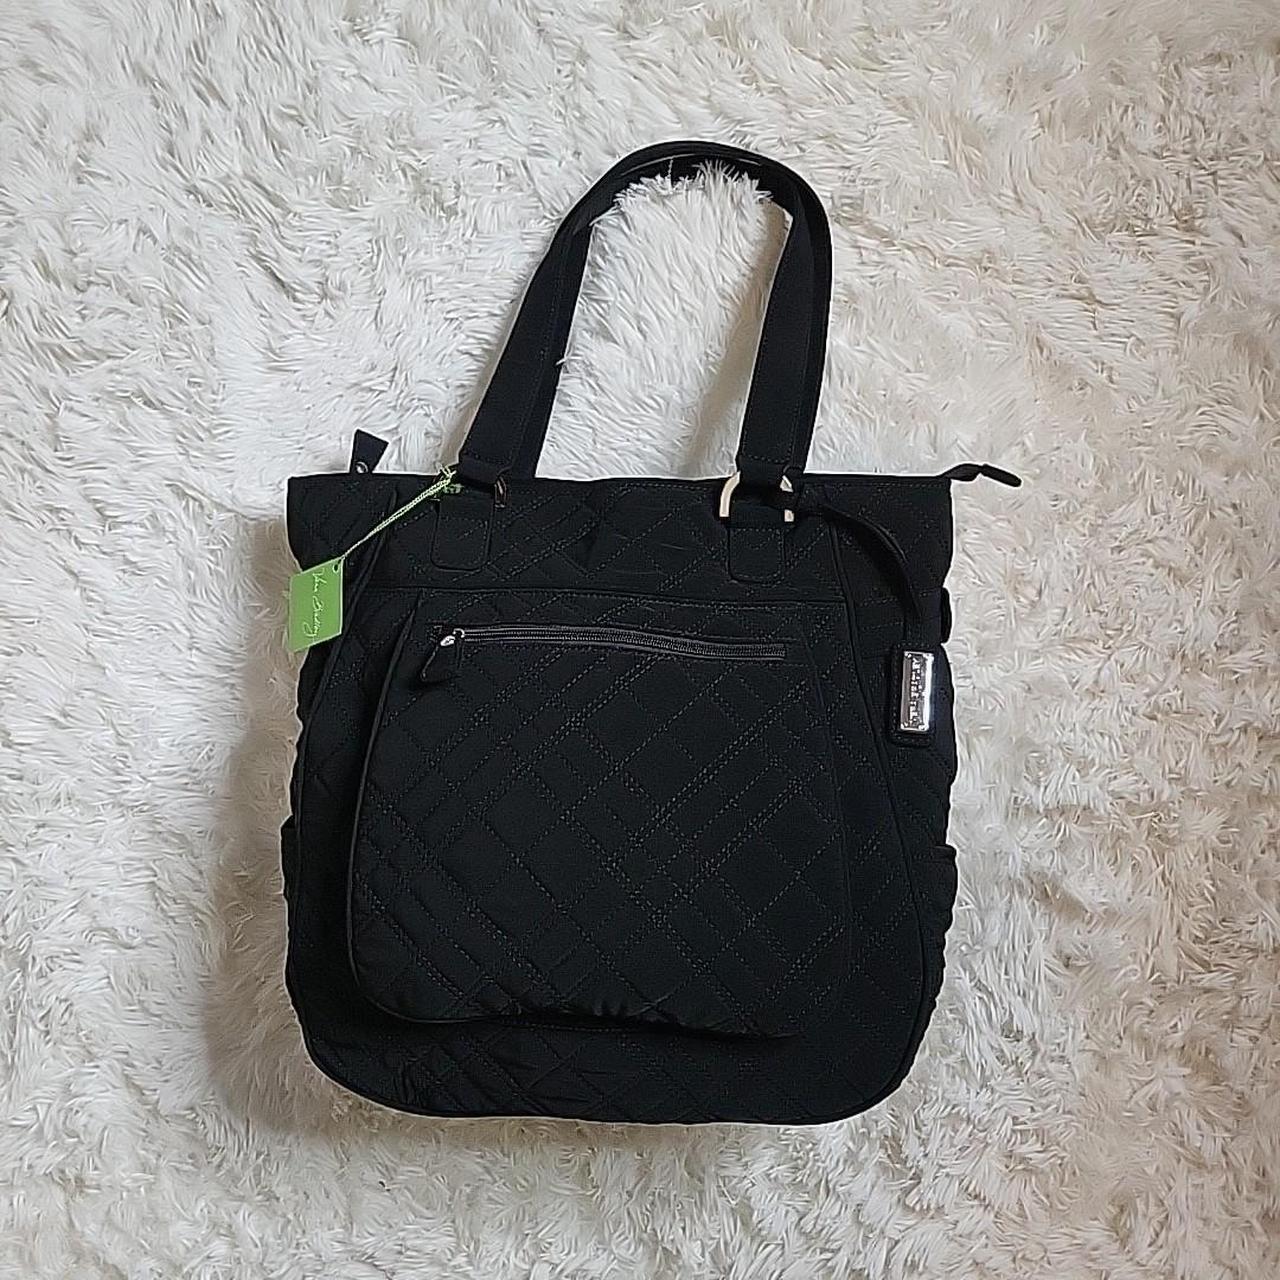 Kate Spade Black Leather Large Tote Bag/purse | eBay